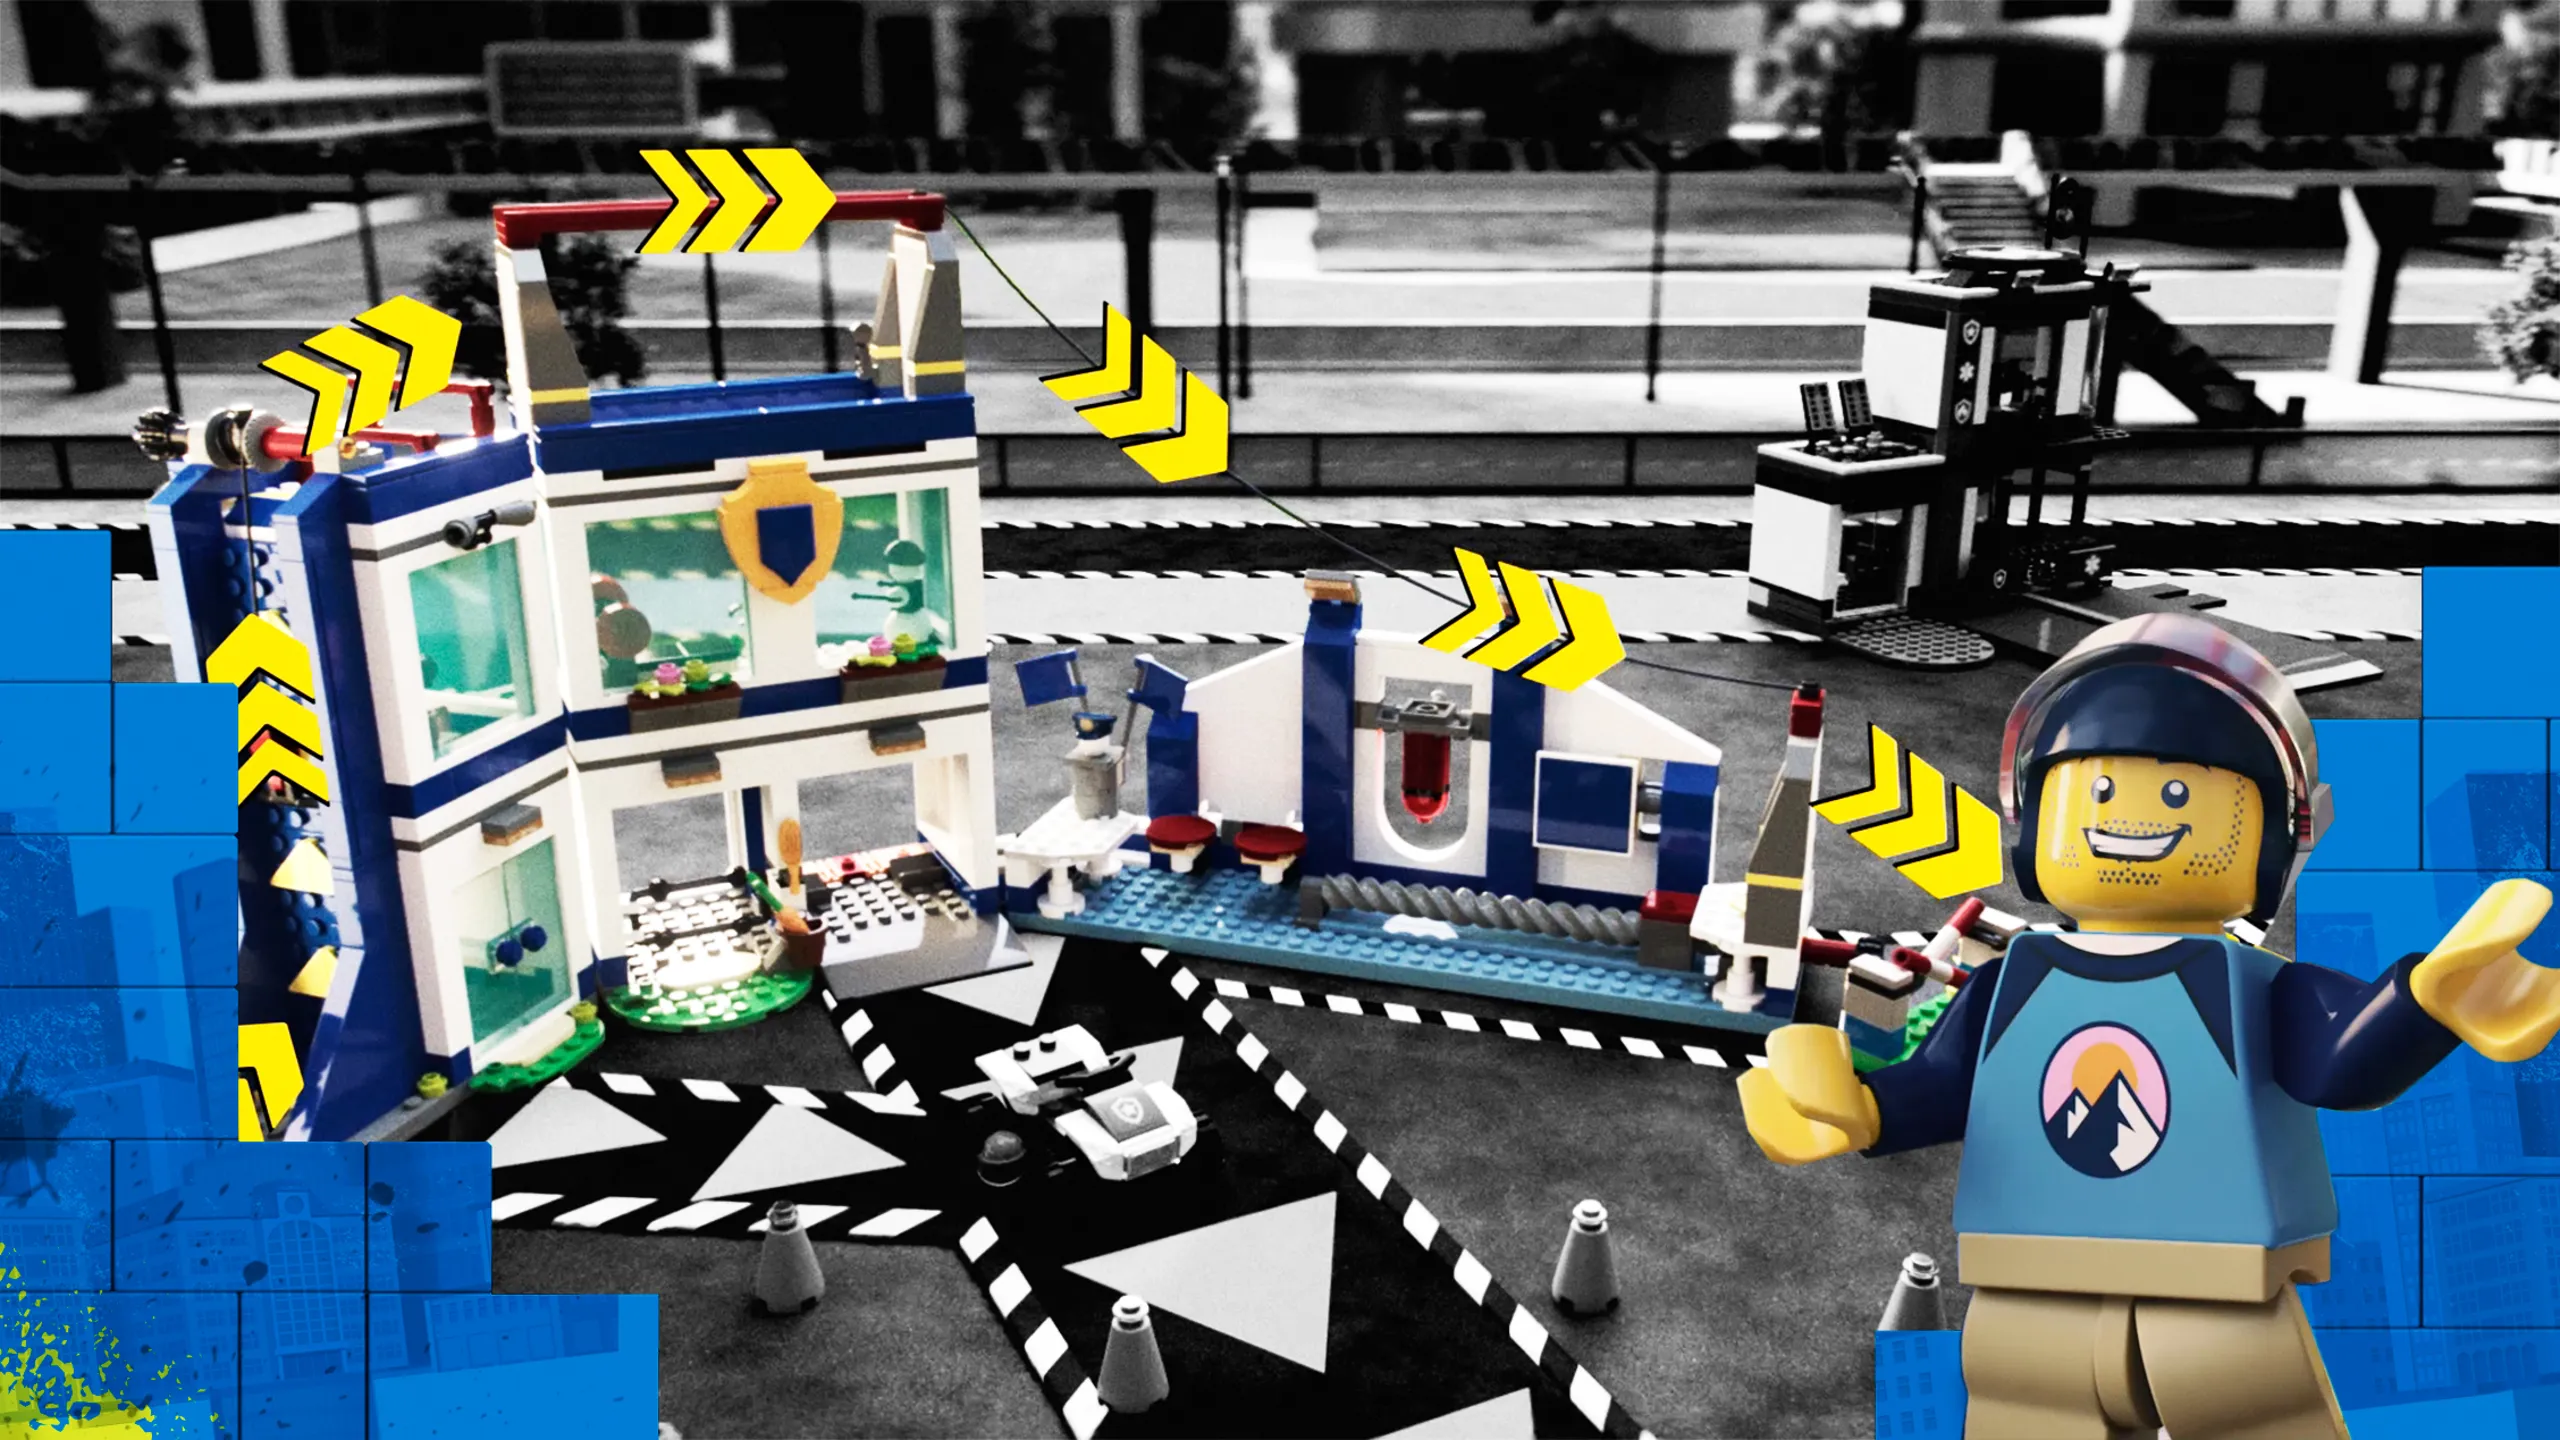 Over Gound Train Station 3  Lego worlds, Lego room, Lego architecture